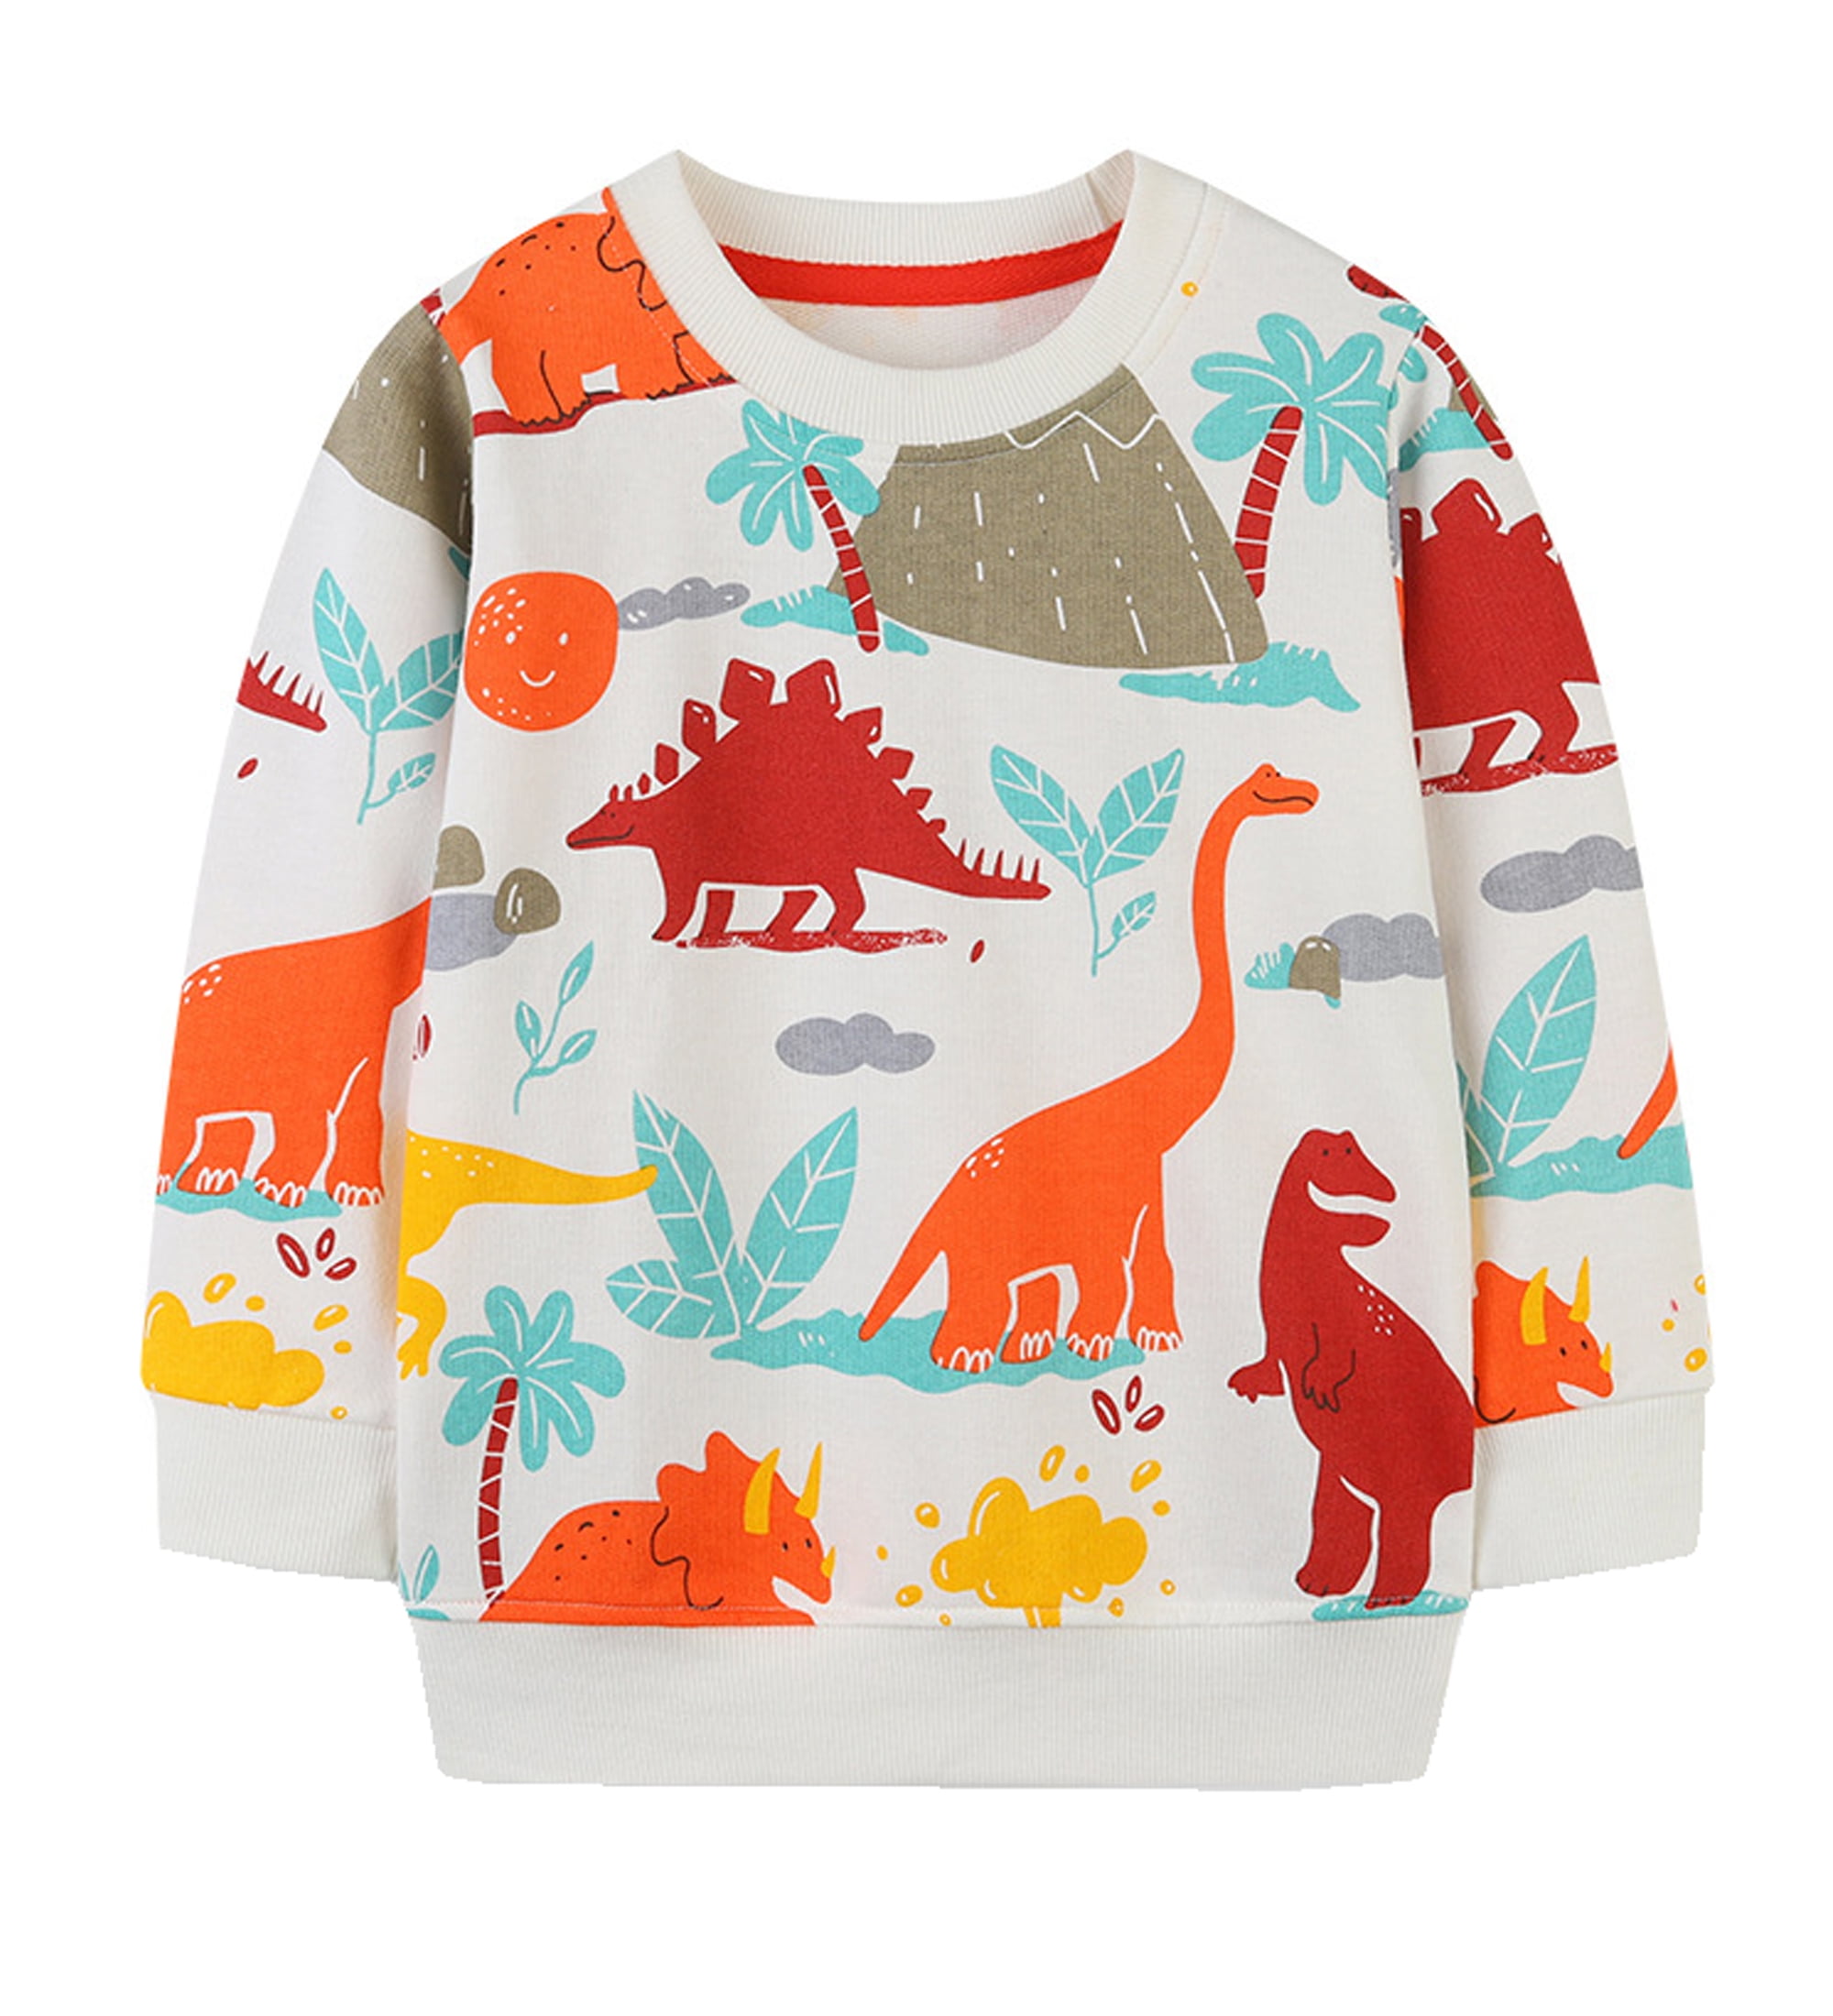 Caerling Boys Sweater Sweatshirt Top Long Sleeve Dinosaur Warm Pullover for Kids 2-7 Years 